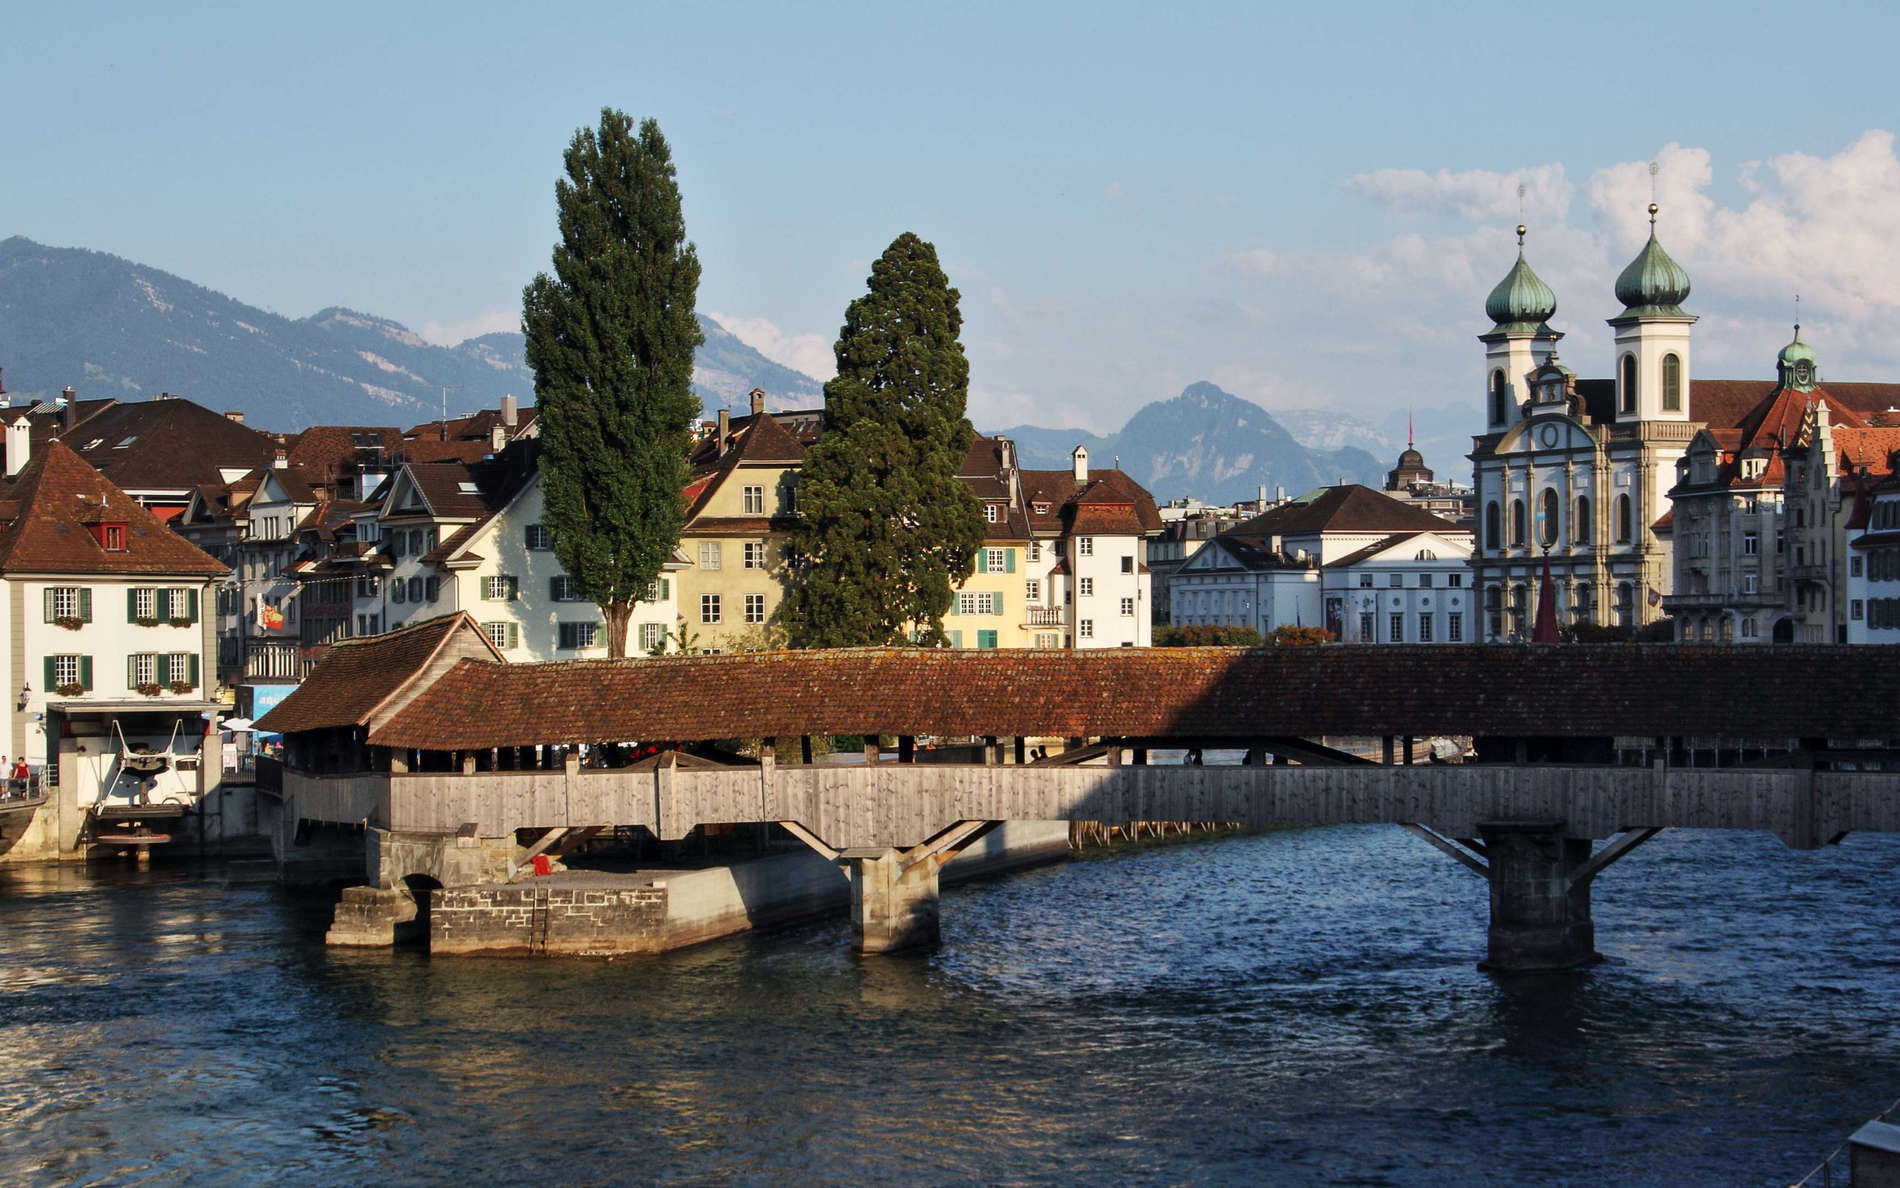 Luzern | Spreuerbrücke and old town